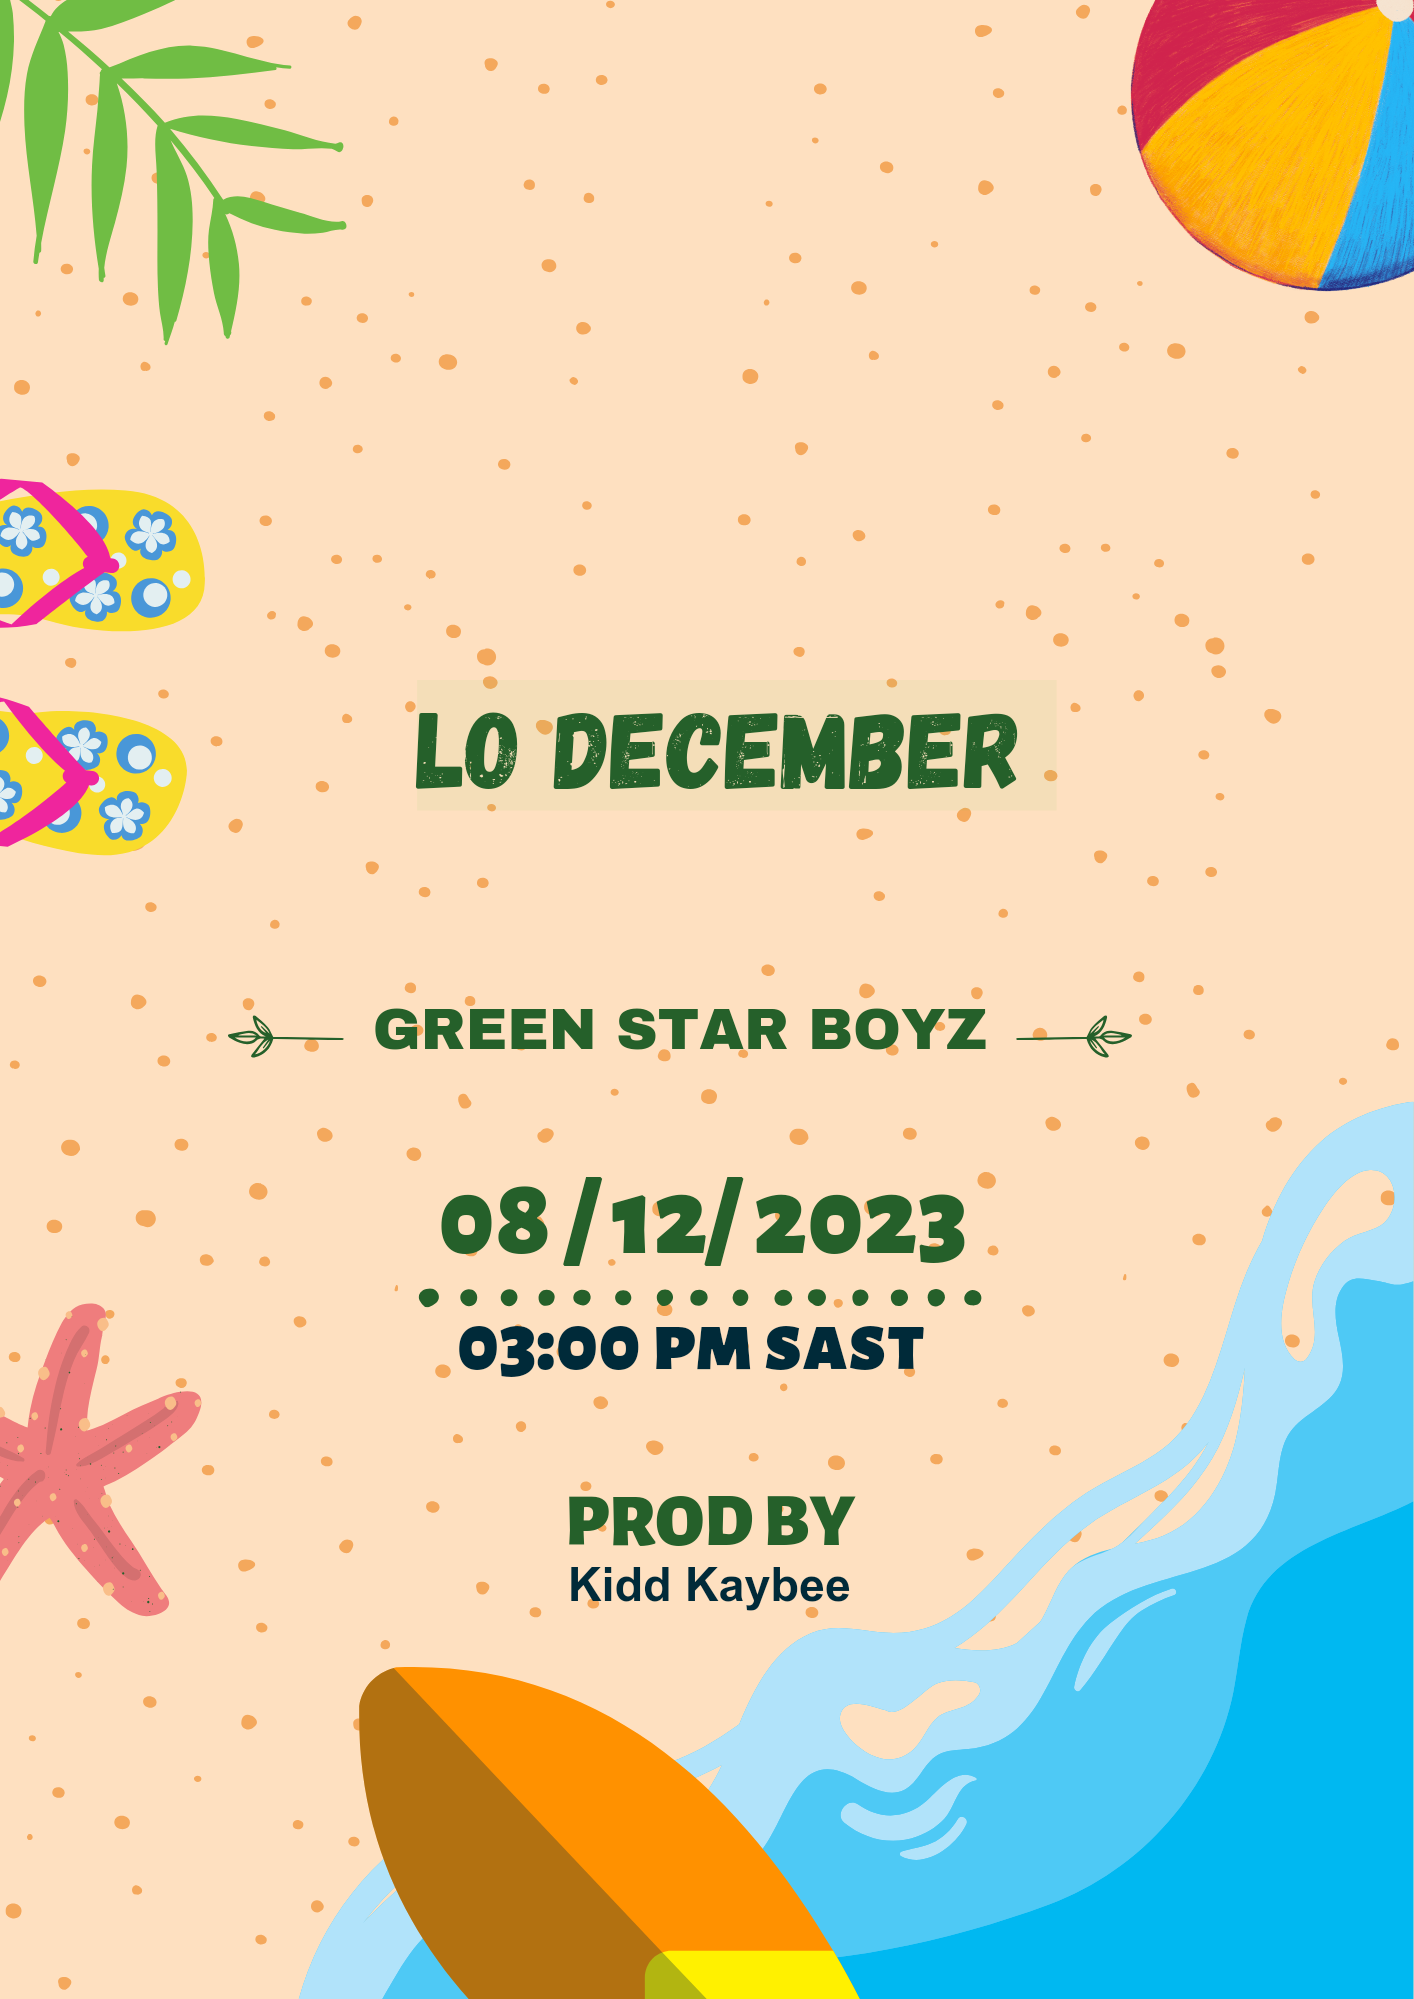 Lo December - Green Star Boyz